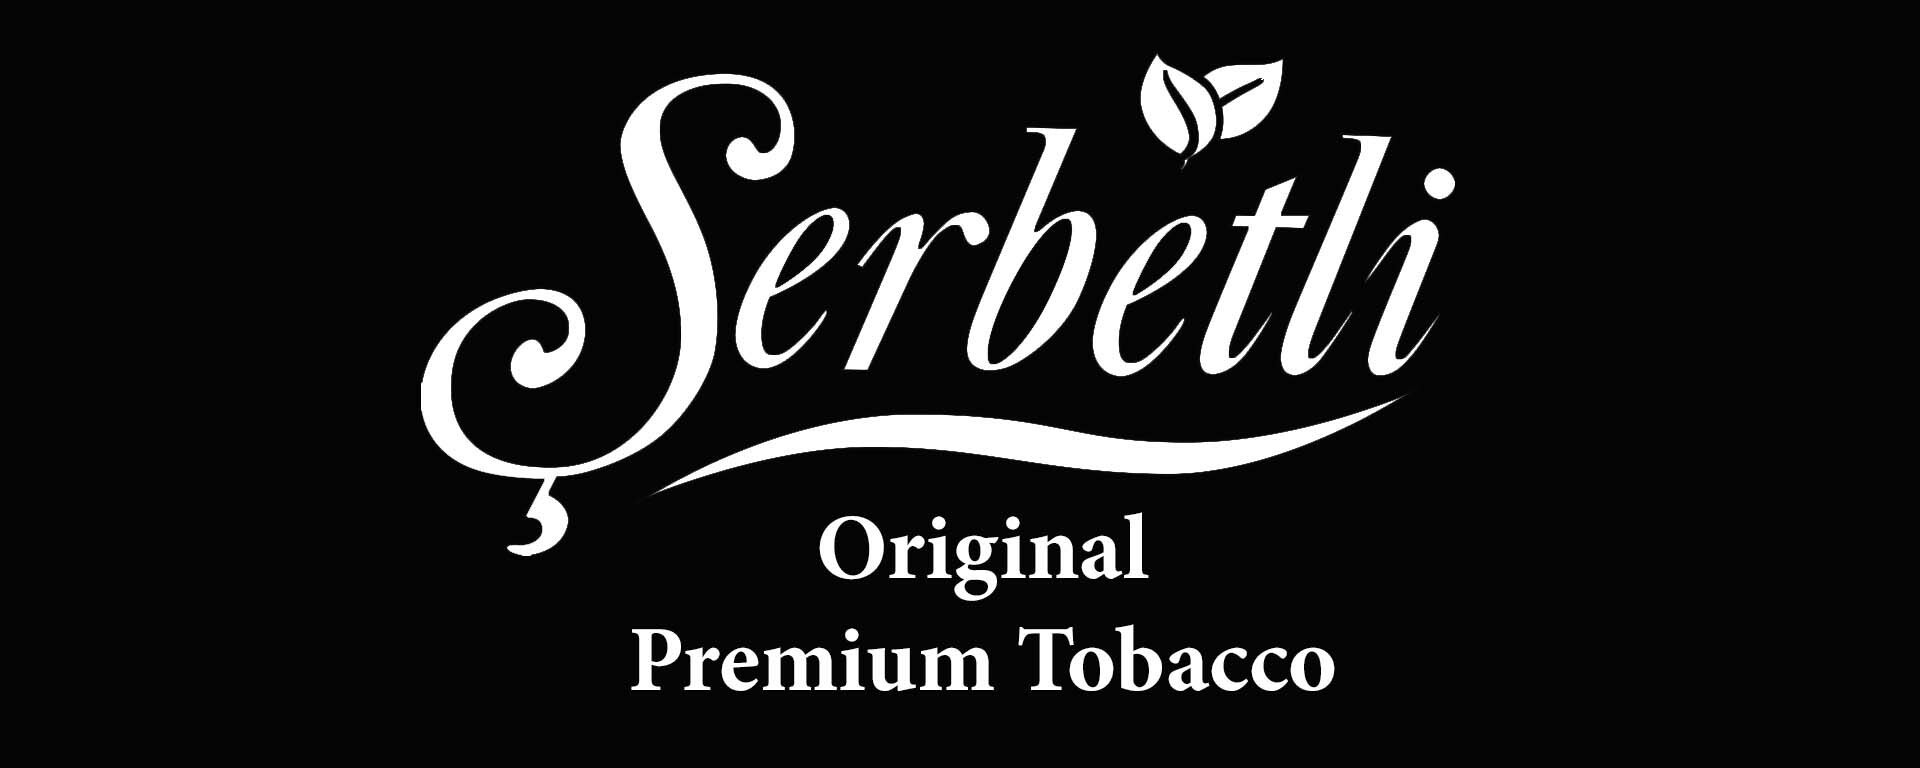 Табак Serbetli Original Premium Tobacco